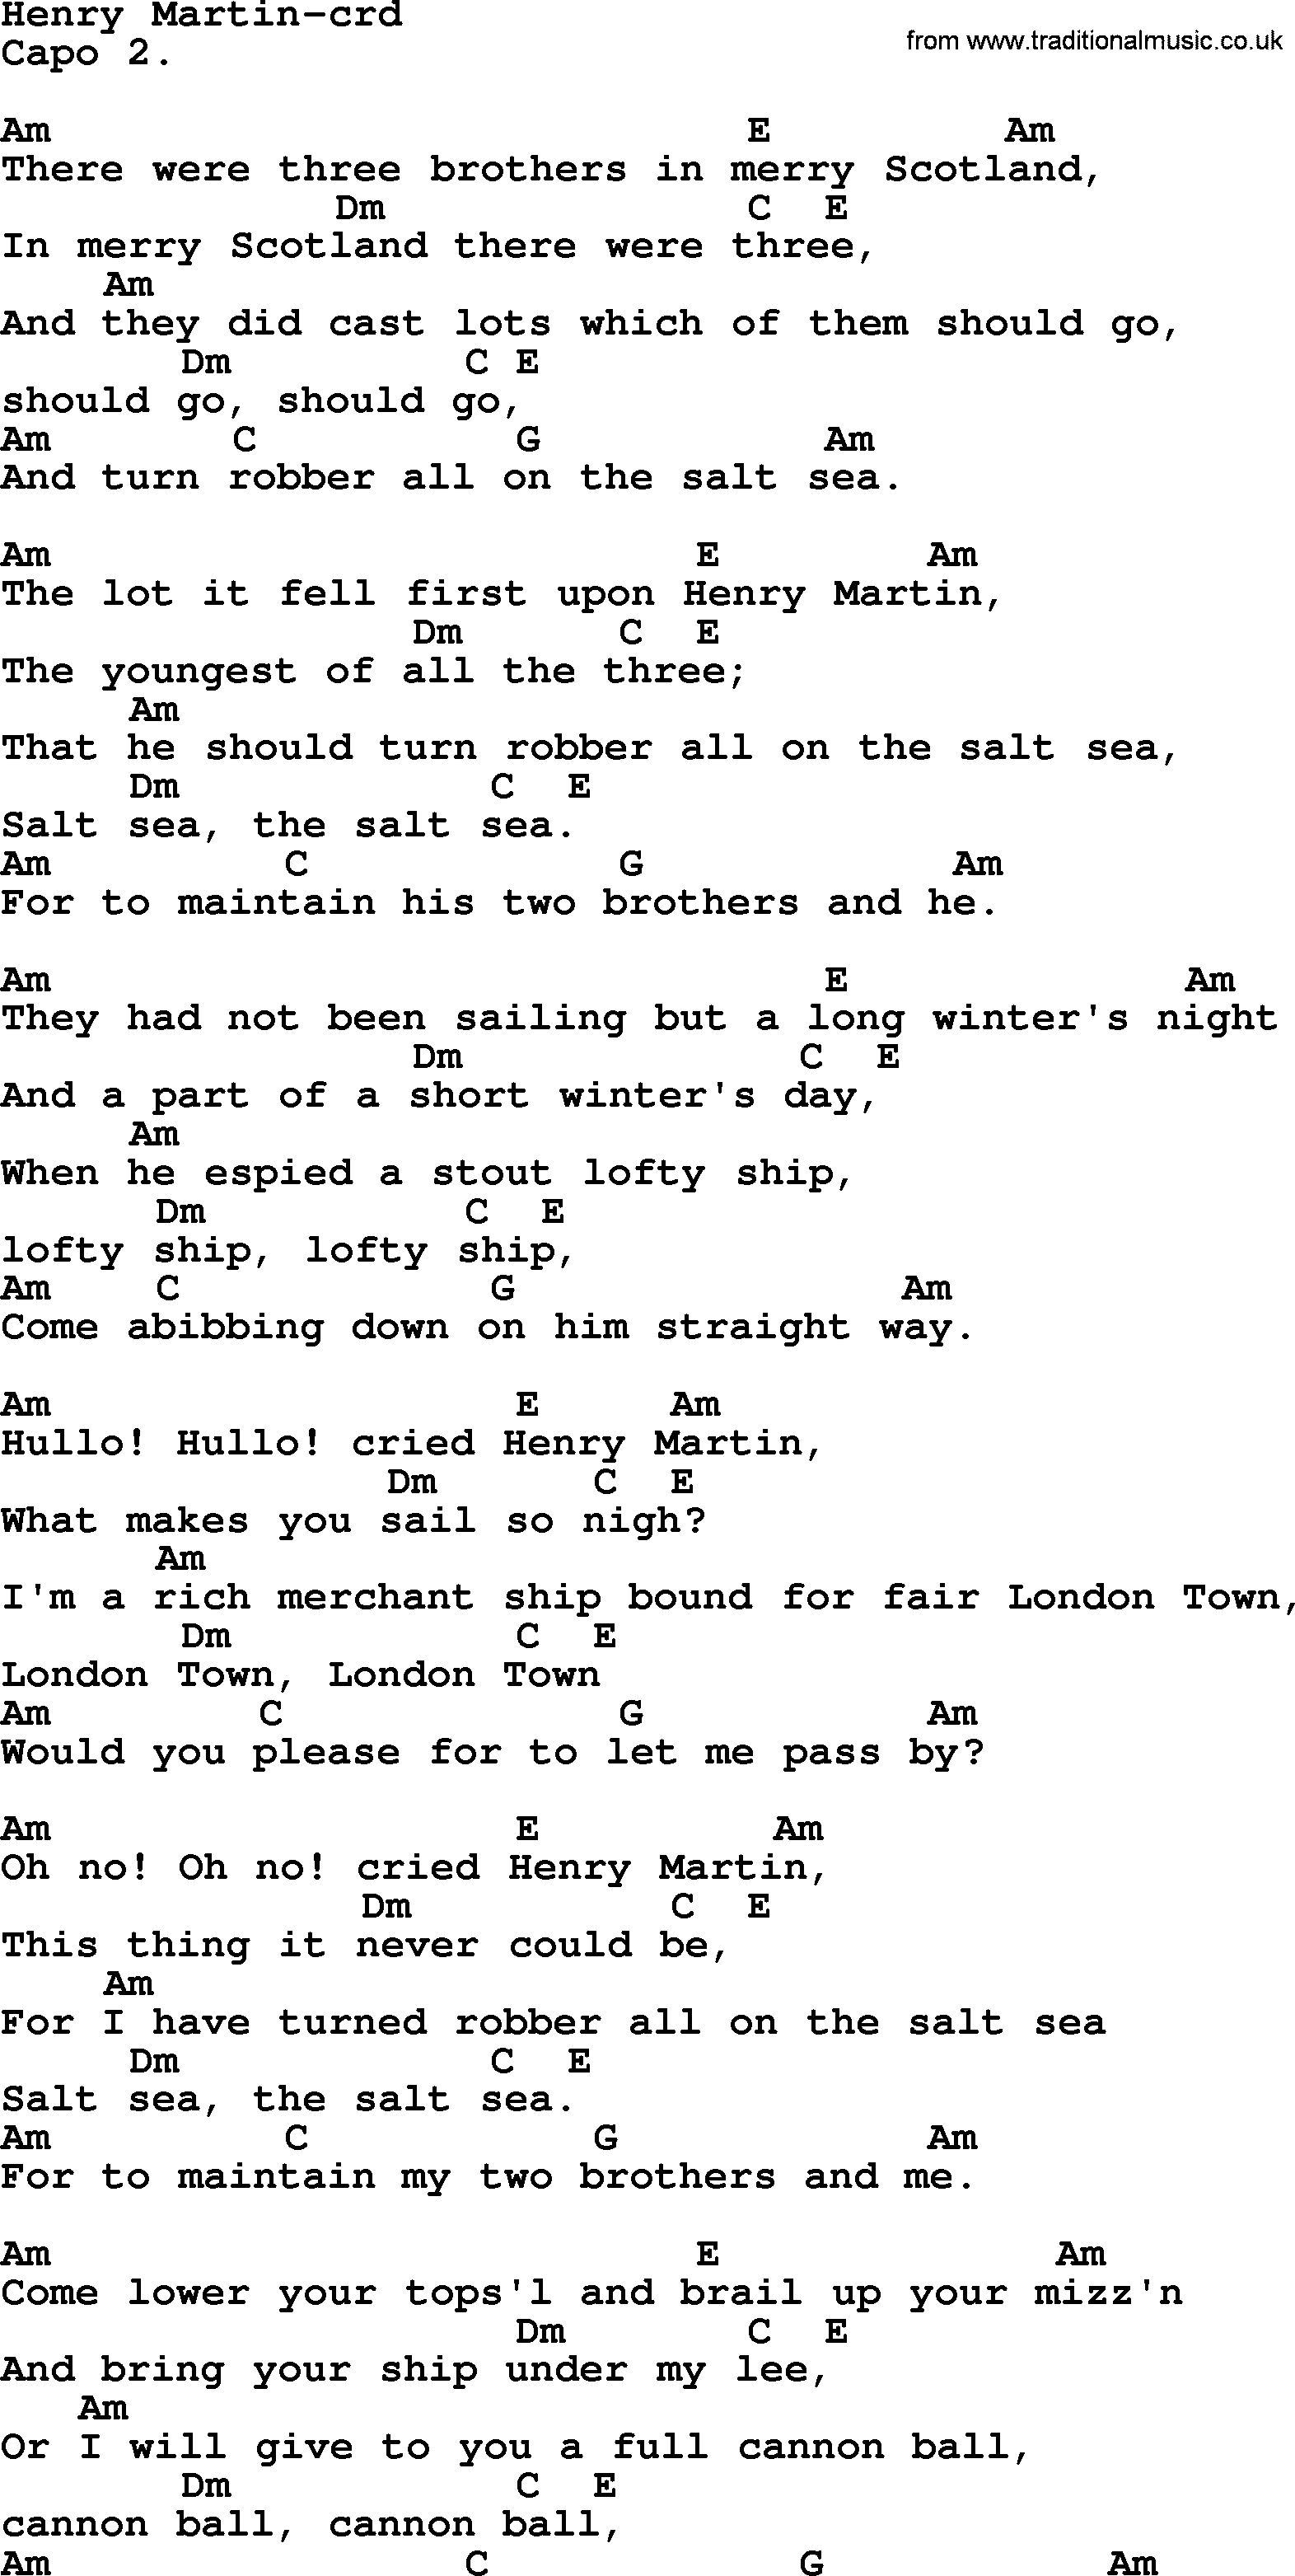 Joan Baez song Henry Martin lyrics and chords